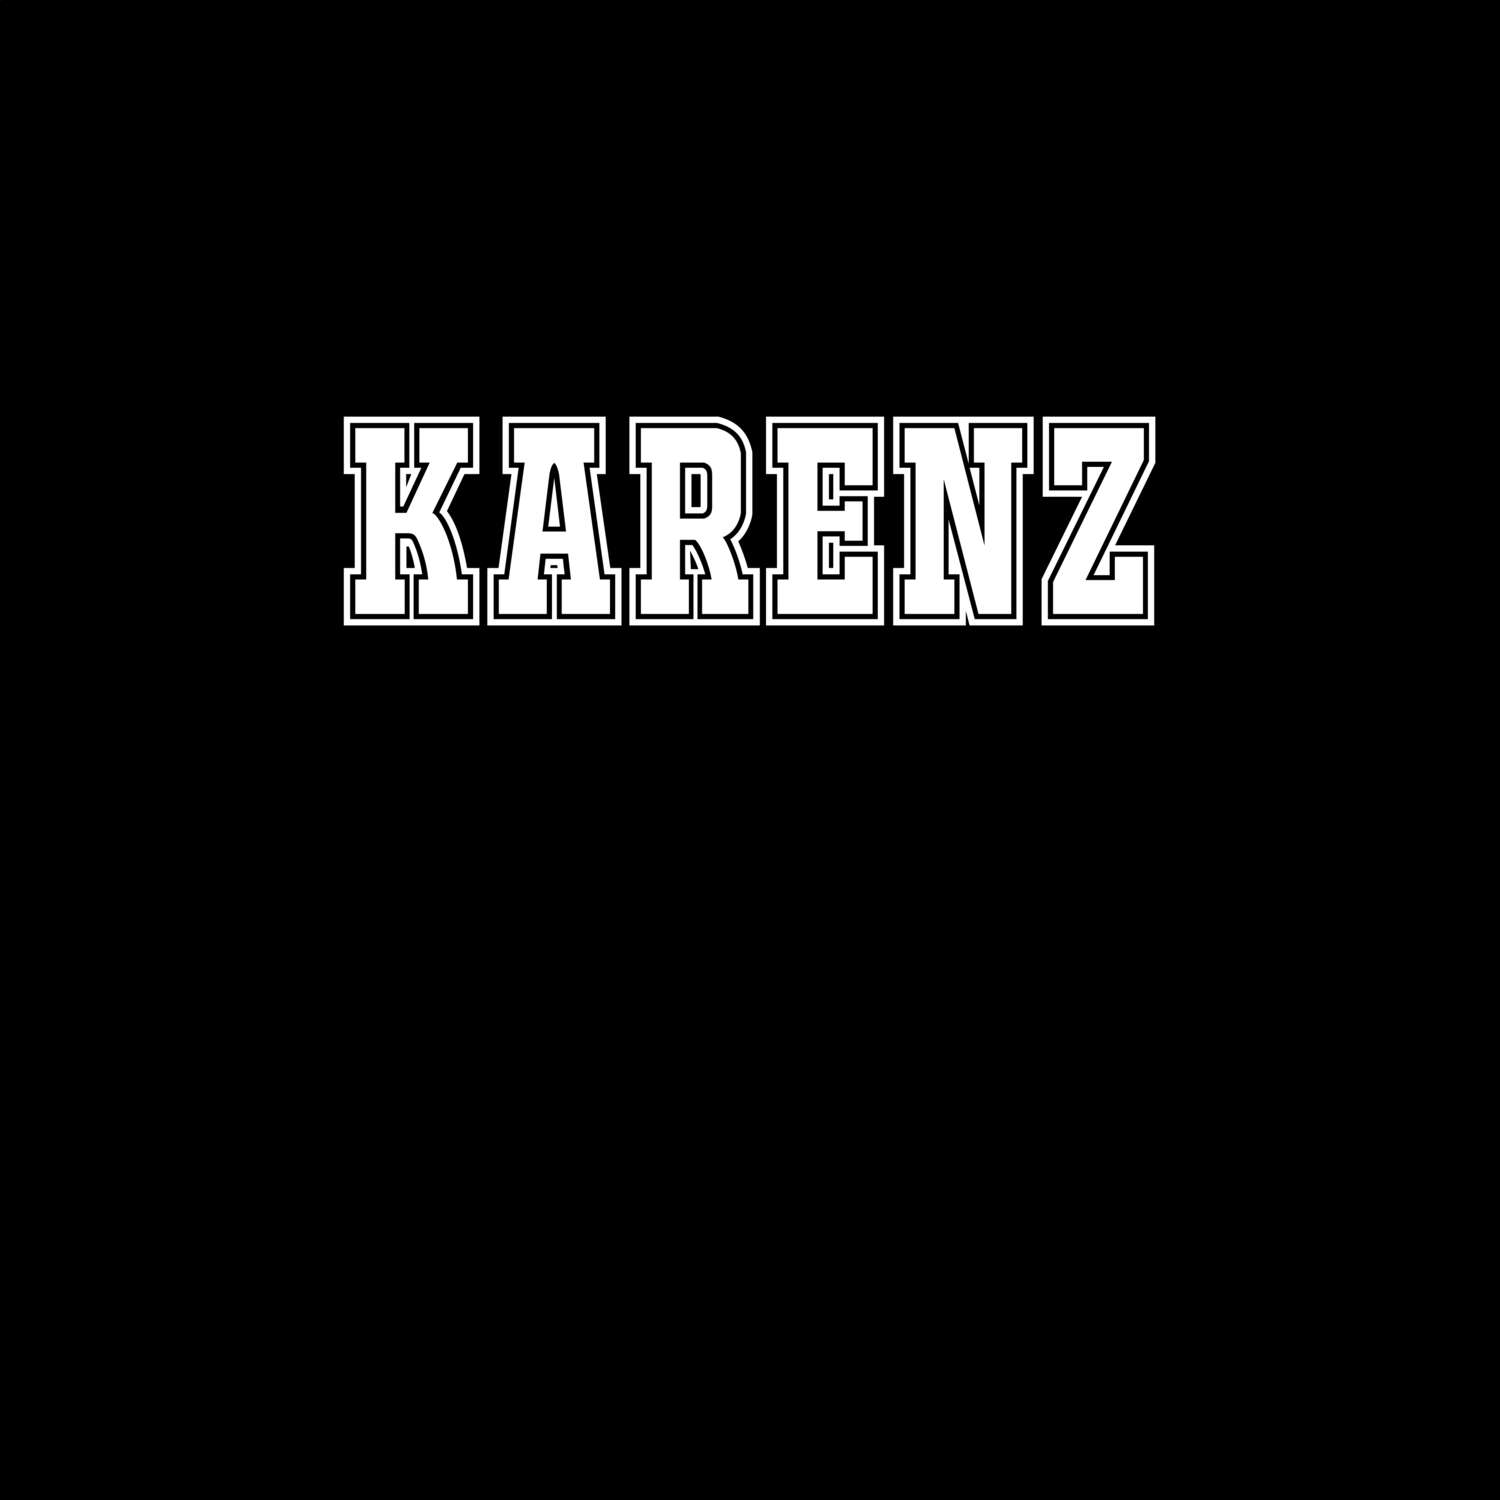 Karenz T-Shirt »Classic«